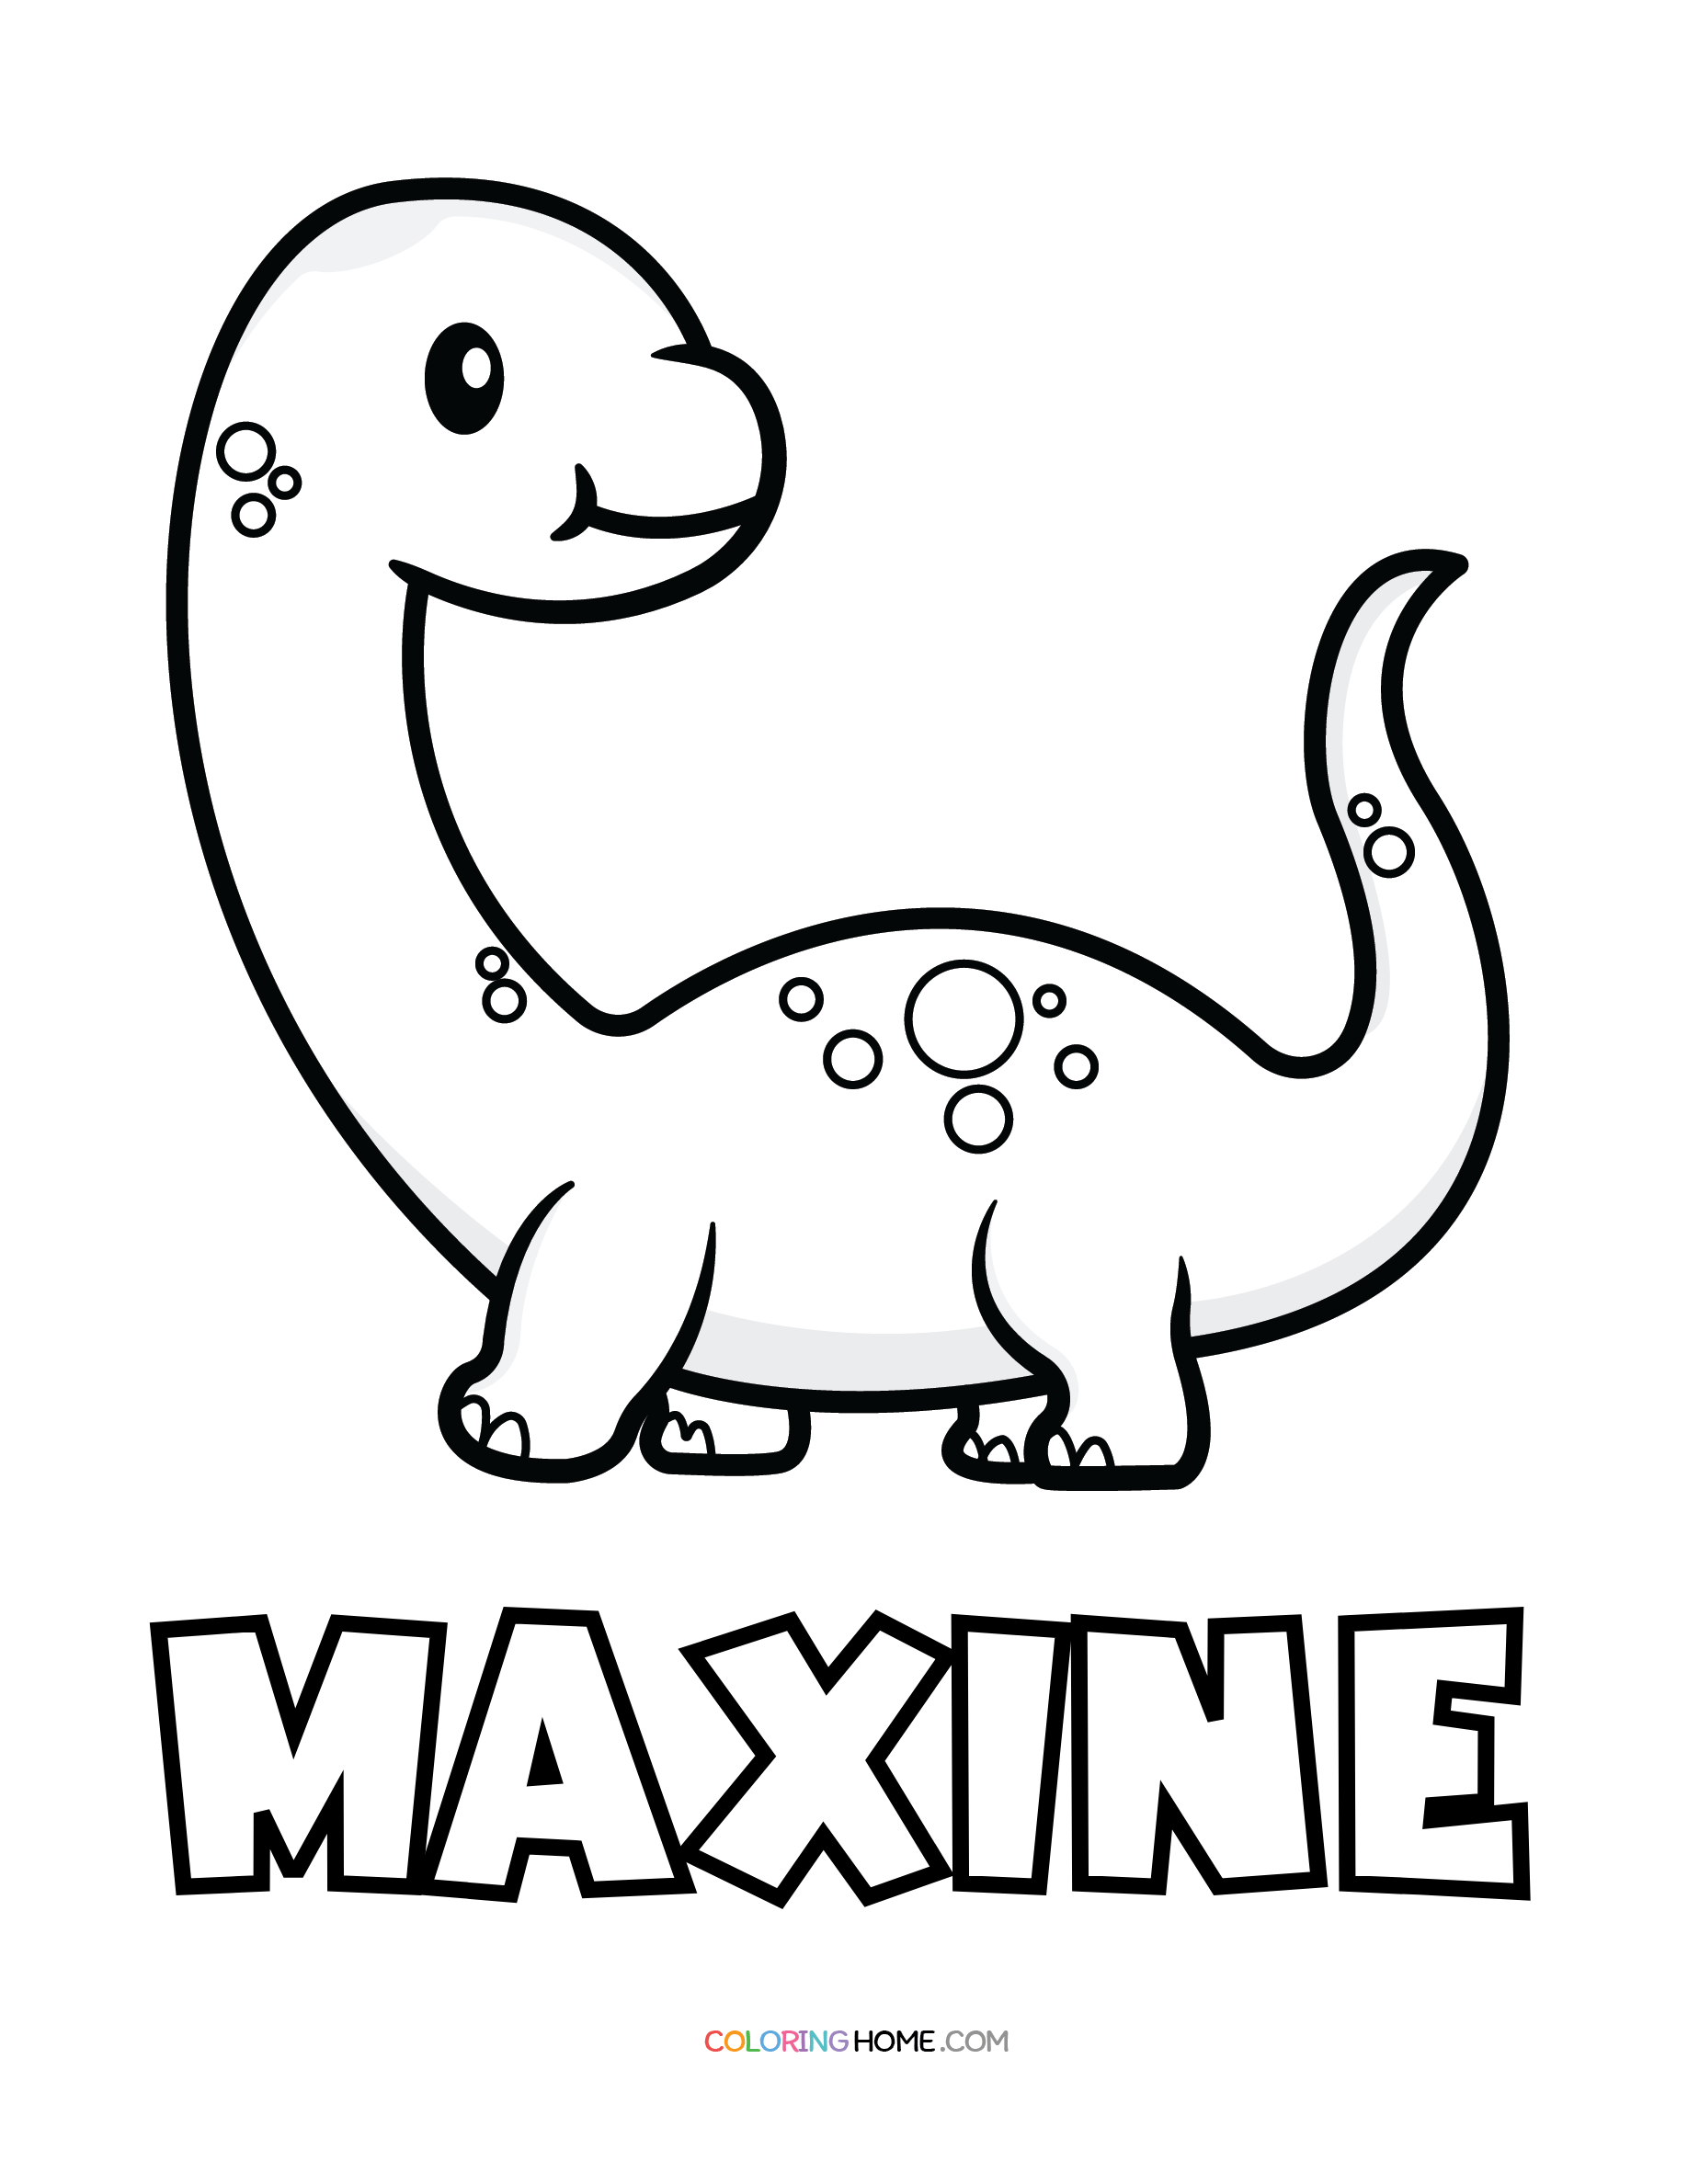 Maxine dinosaur coloring page